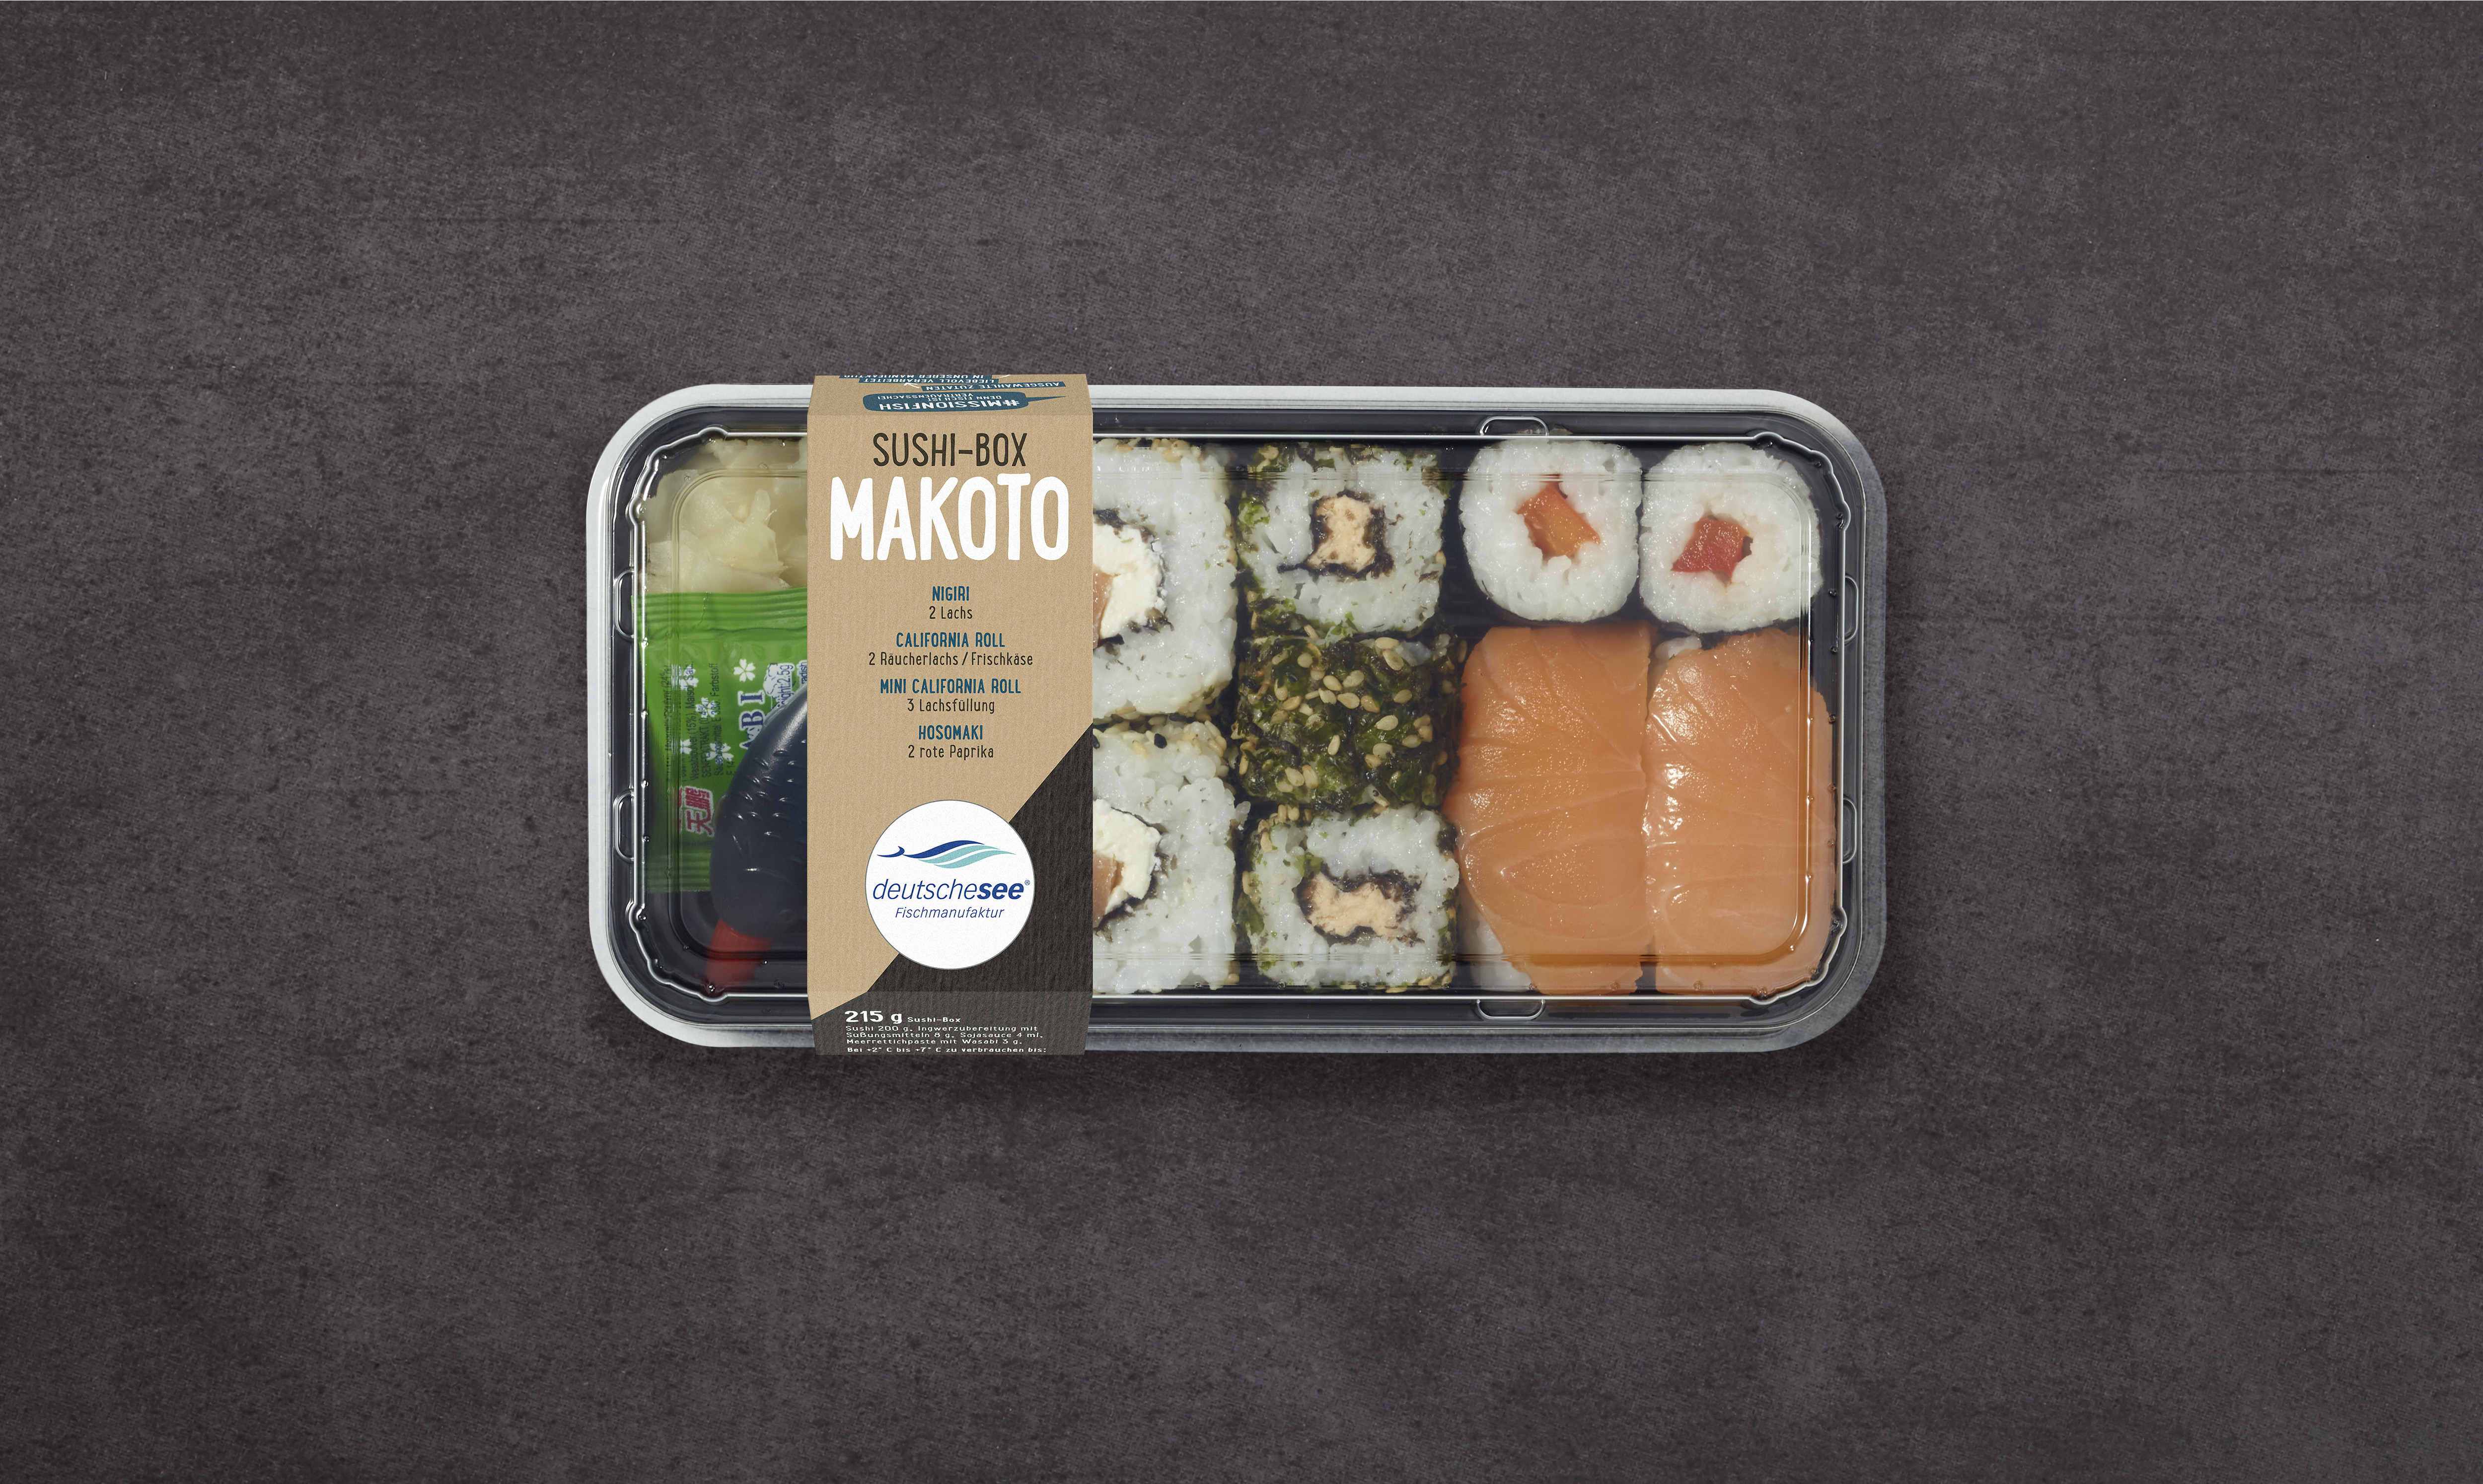 Sushi-Box MAKOTO